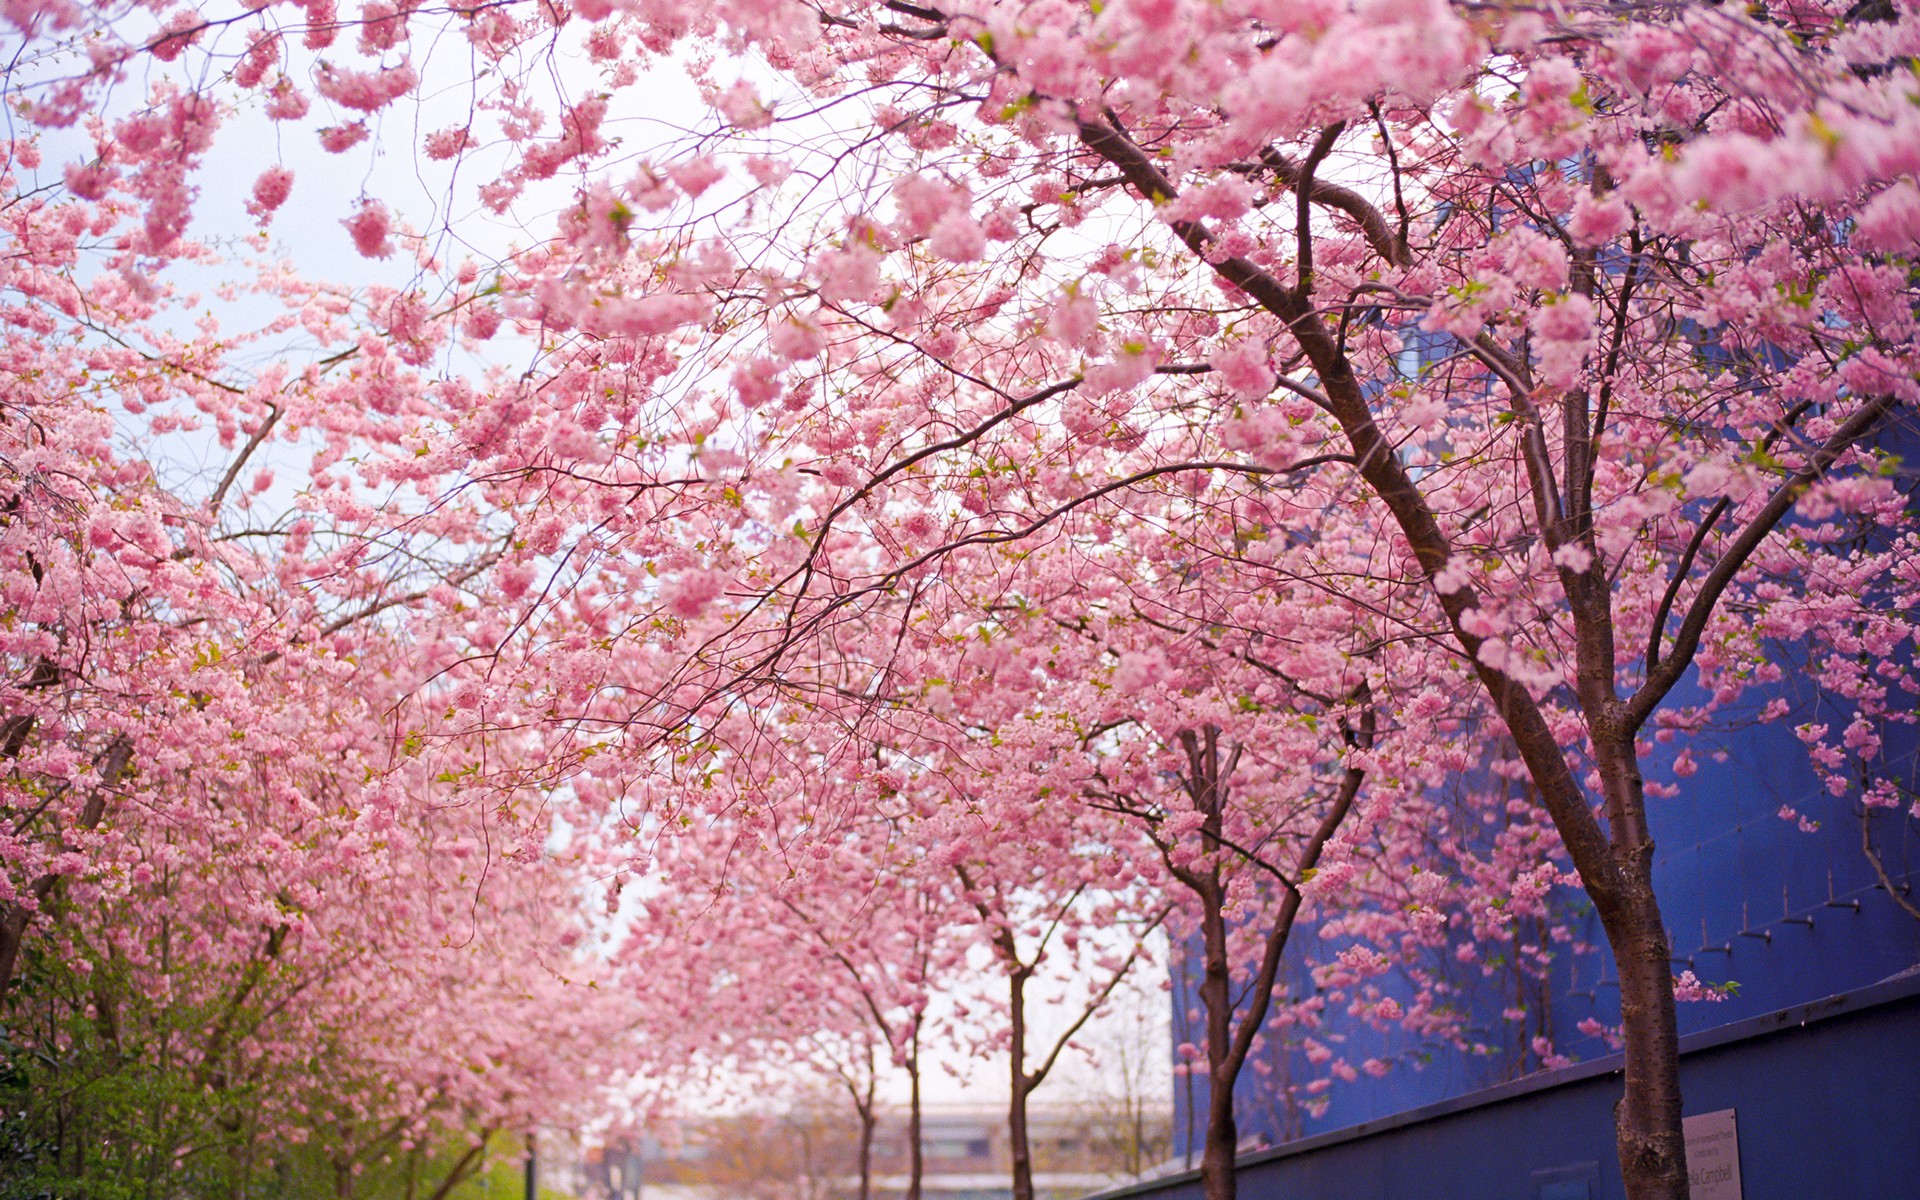 11664) Cherry Blossom Tree Widescreen Desktop Wallpaper - WalOps.com